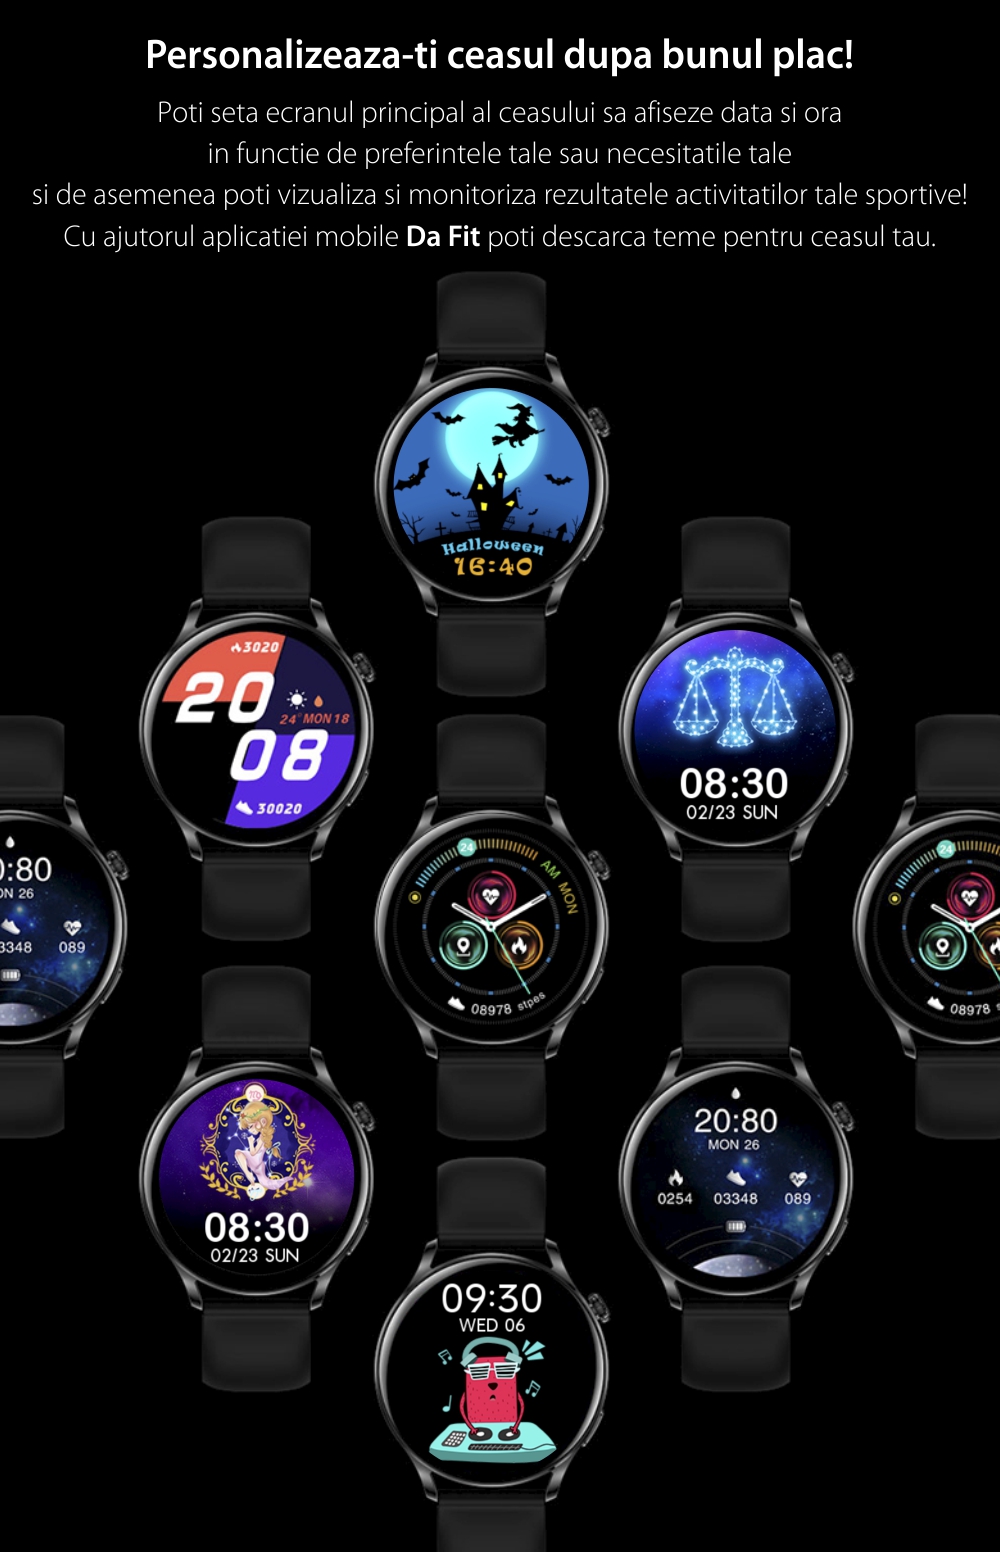 Ceas Smartwatch XK Fitness AK37 cu Functii monitorizare sanatate, Notificari, Bluetooth, Cronometru, Bratara silicon, Negru